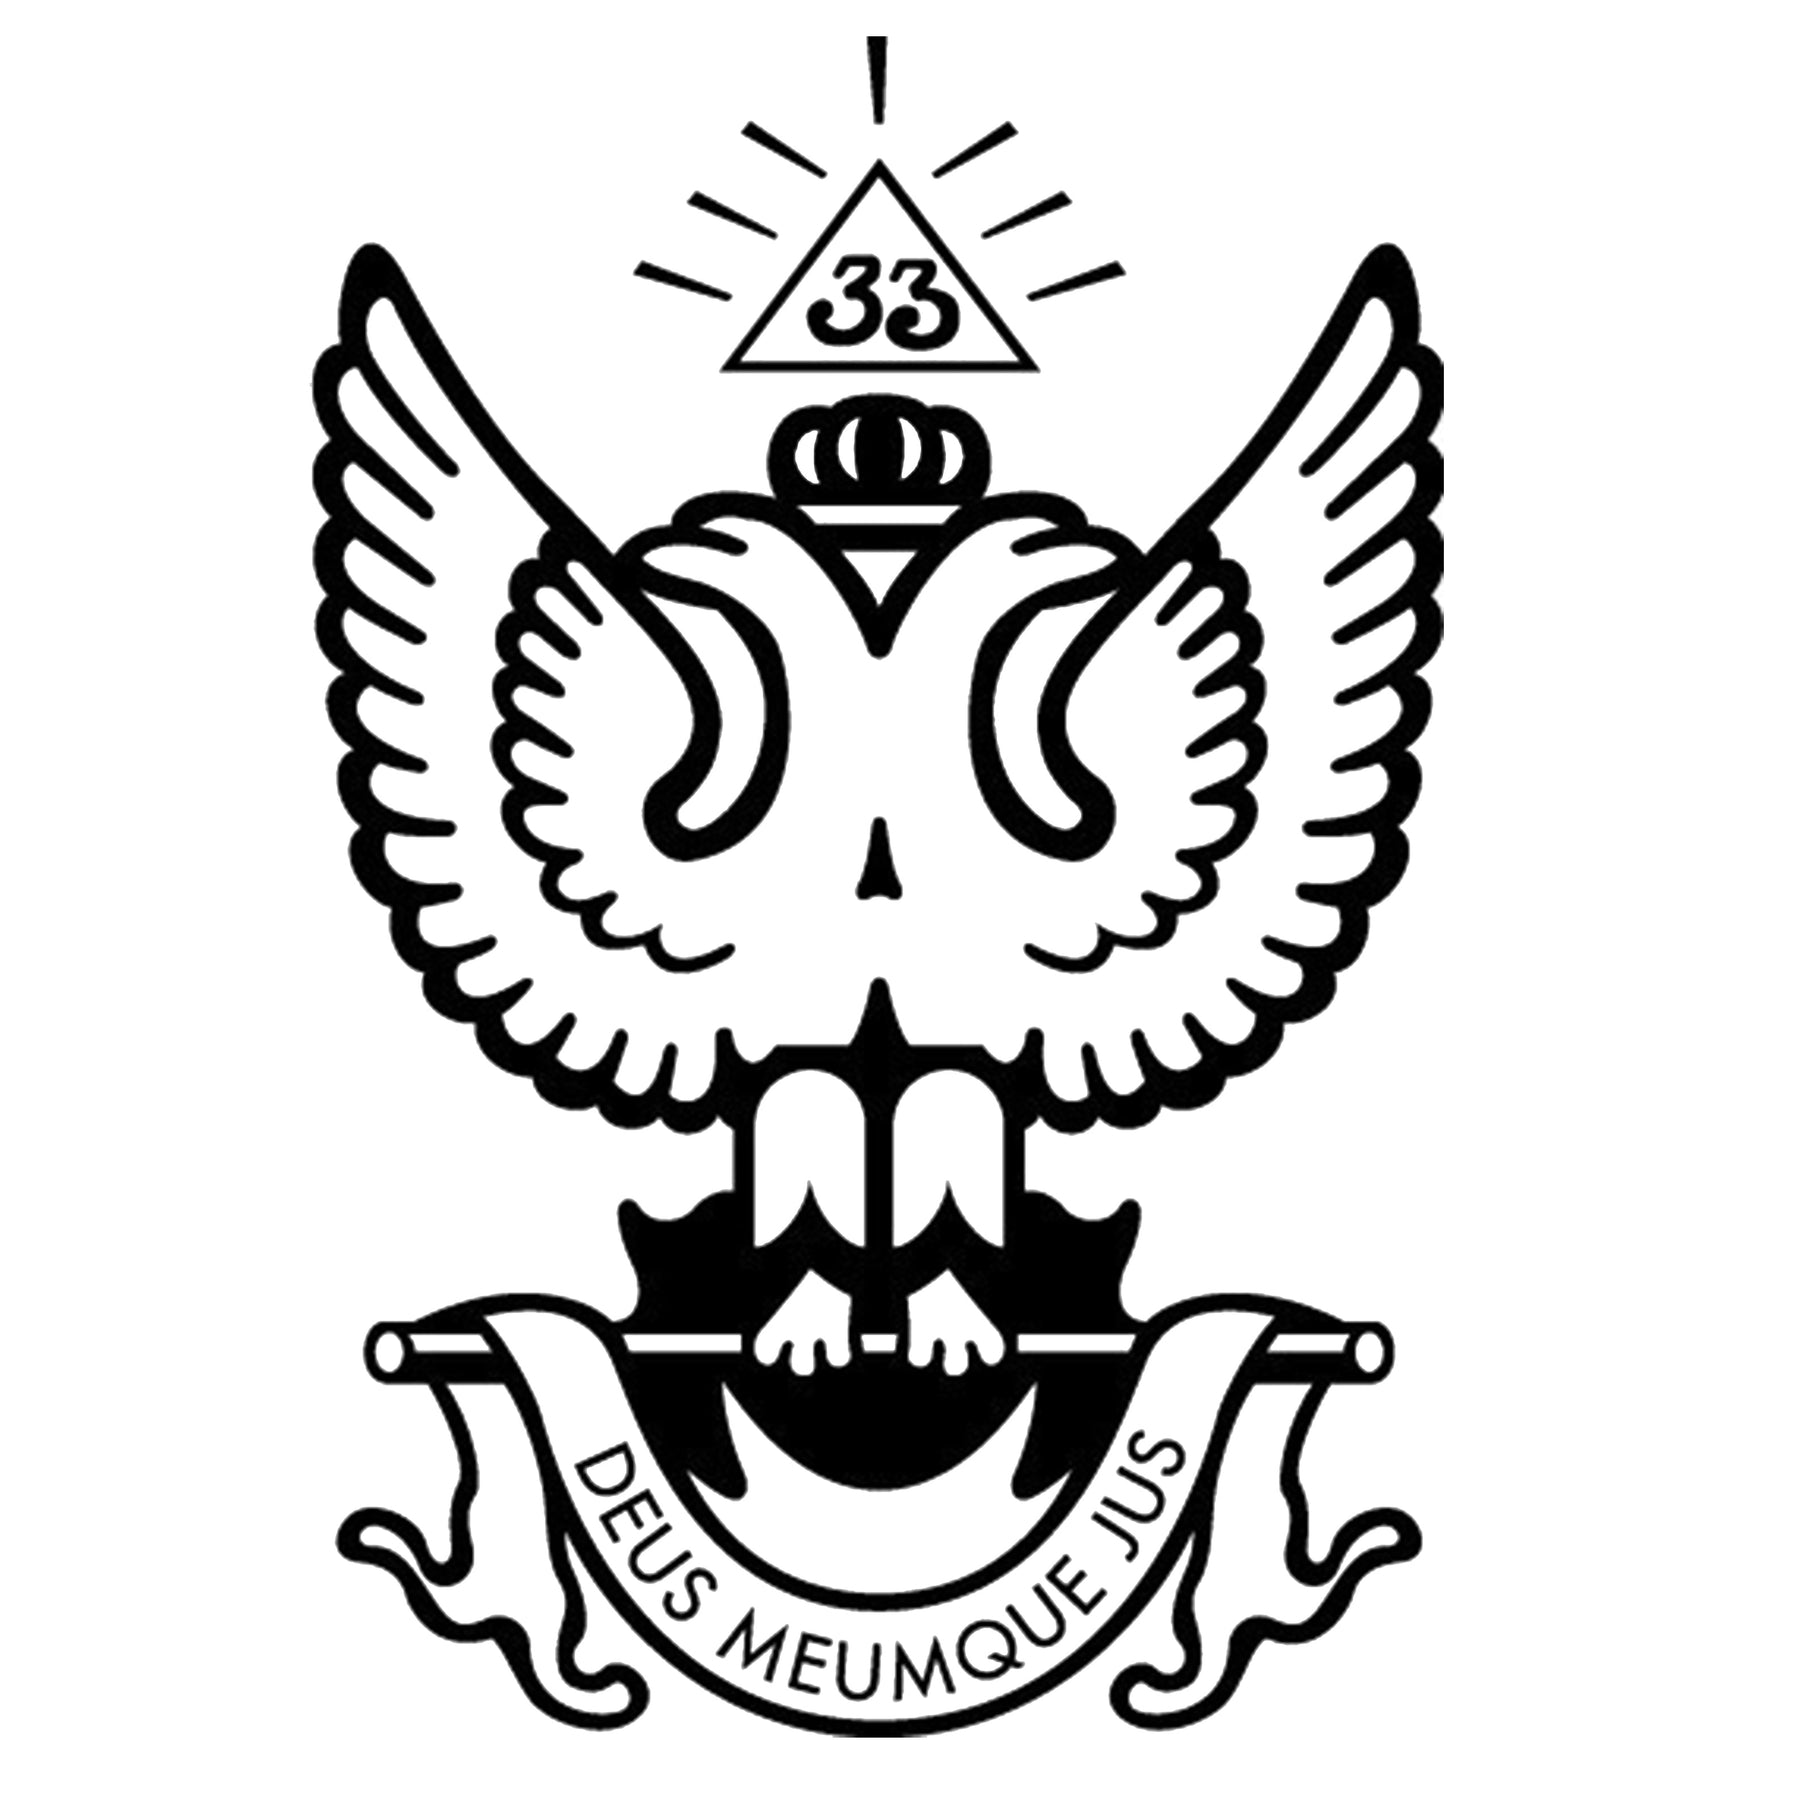 33rd Degree Scottish Rite Wall Monograms - Wings Up Various Sizes - Bricks Masons